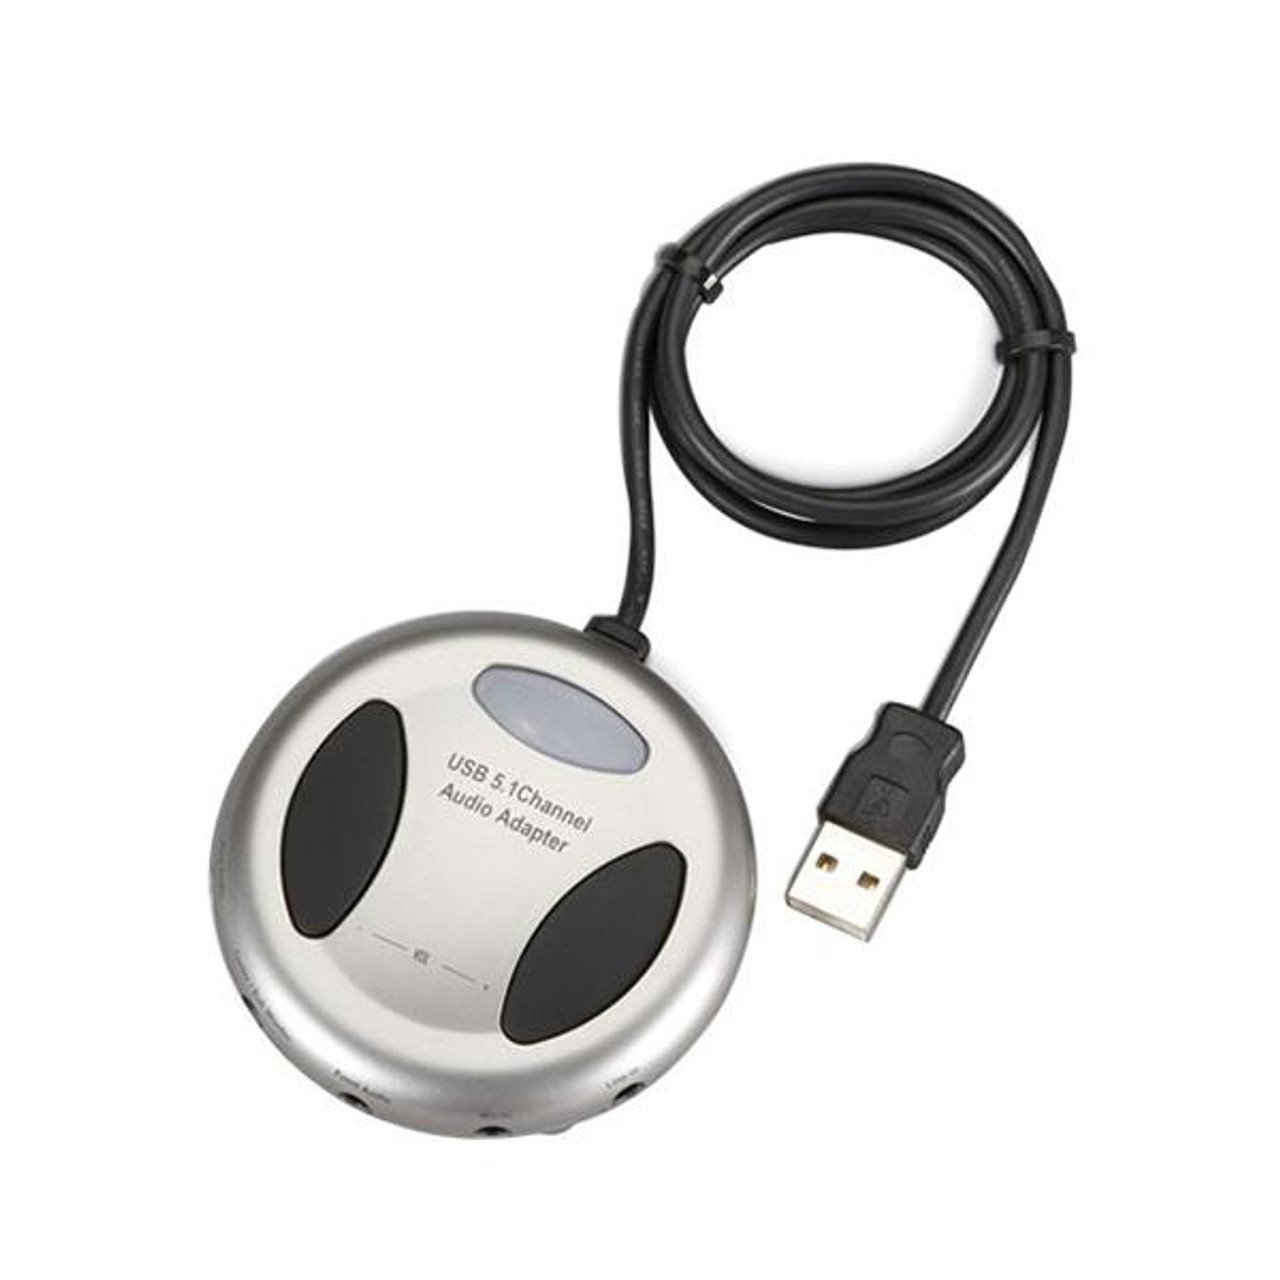 AC670A Black Box USB 5.1 Channel Sound Adapter